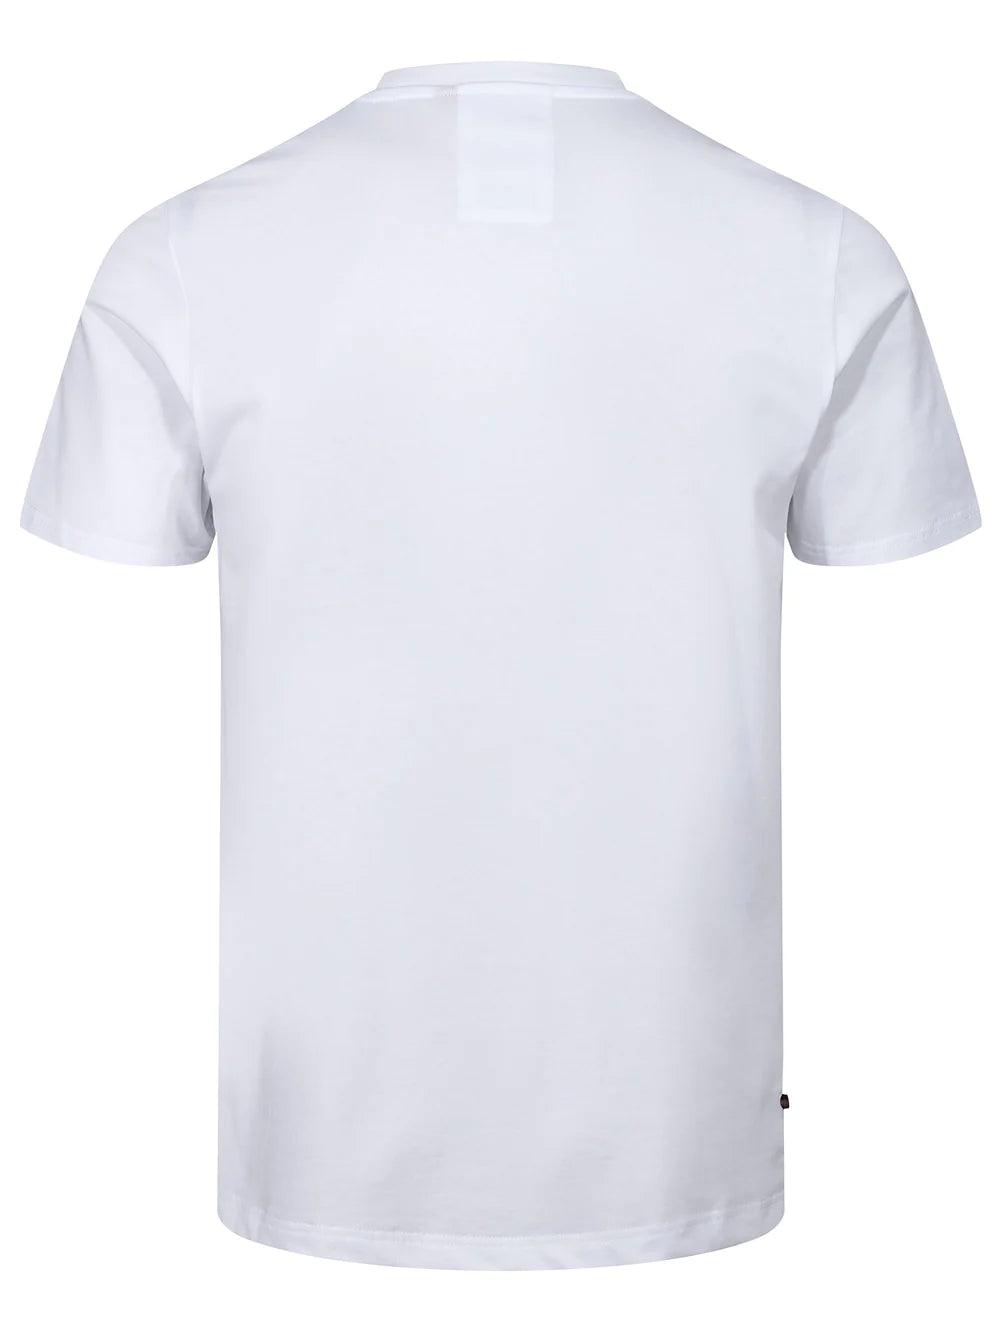 Luke 1977 - Fin T-Shirt White